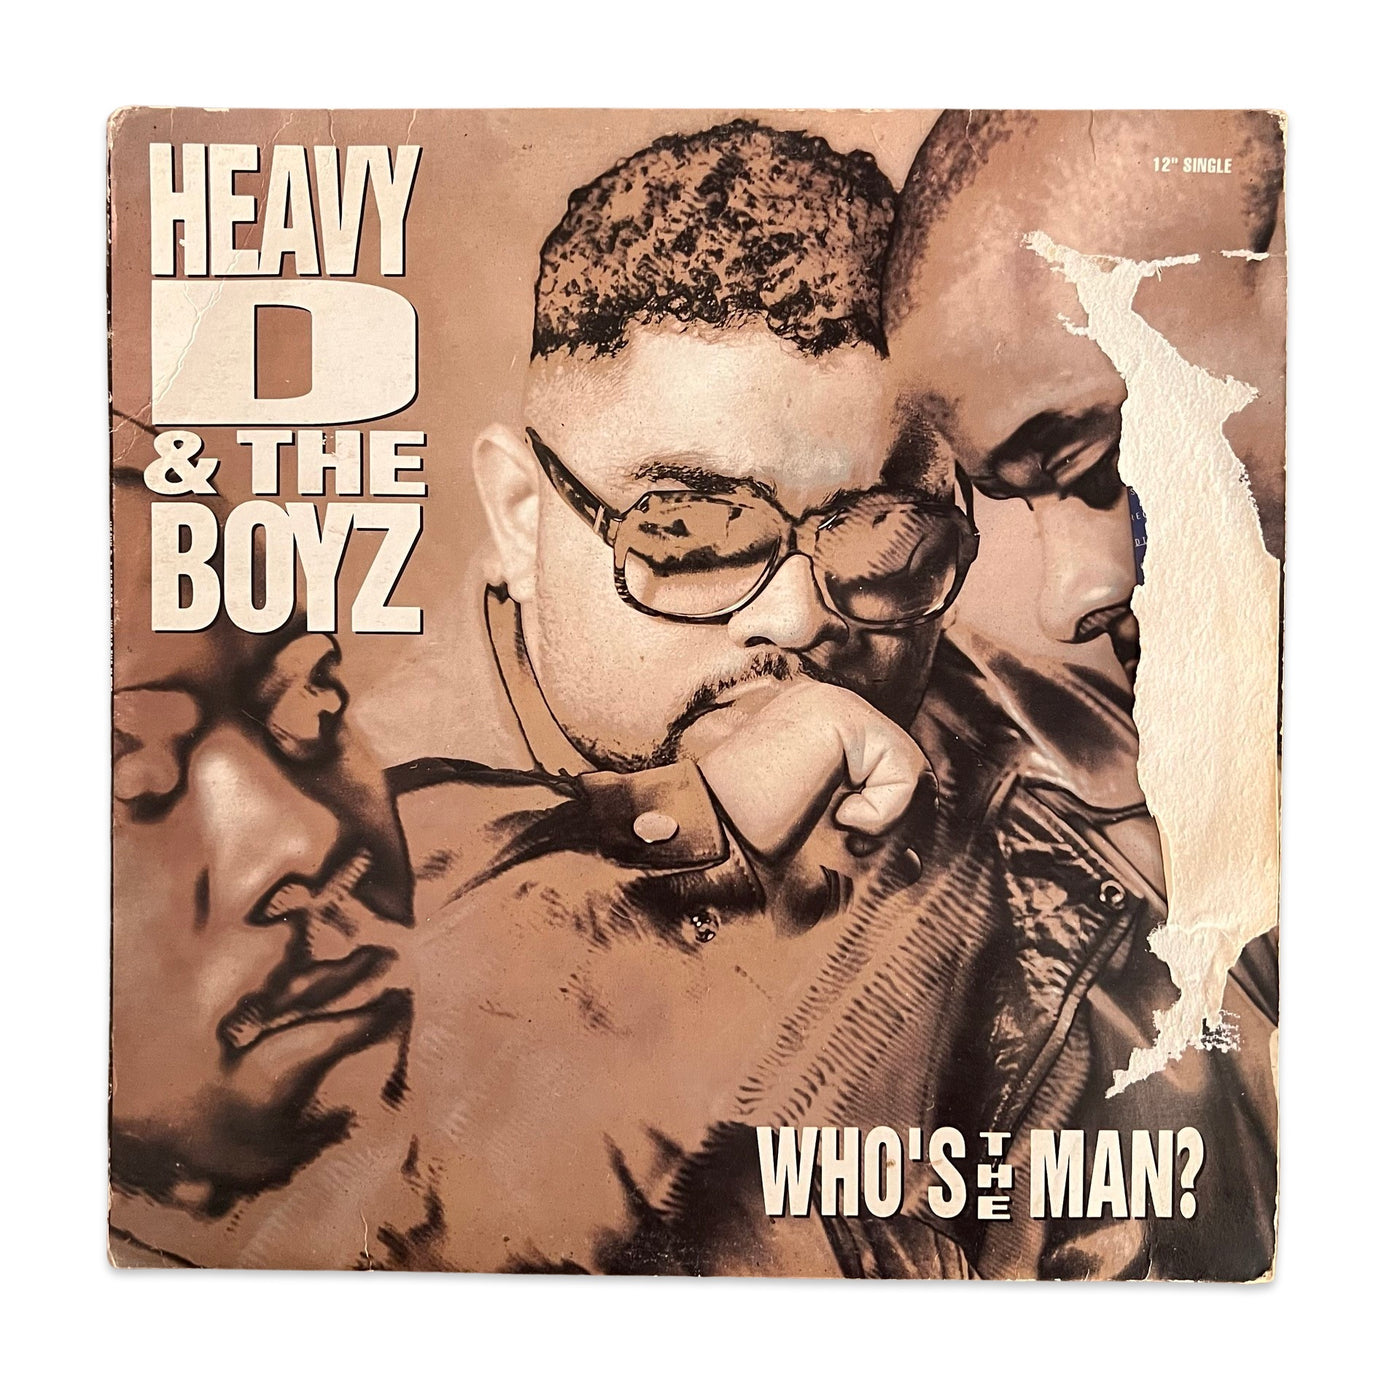 Heavy D. & The Boyz – Who's The Man?